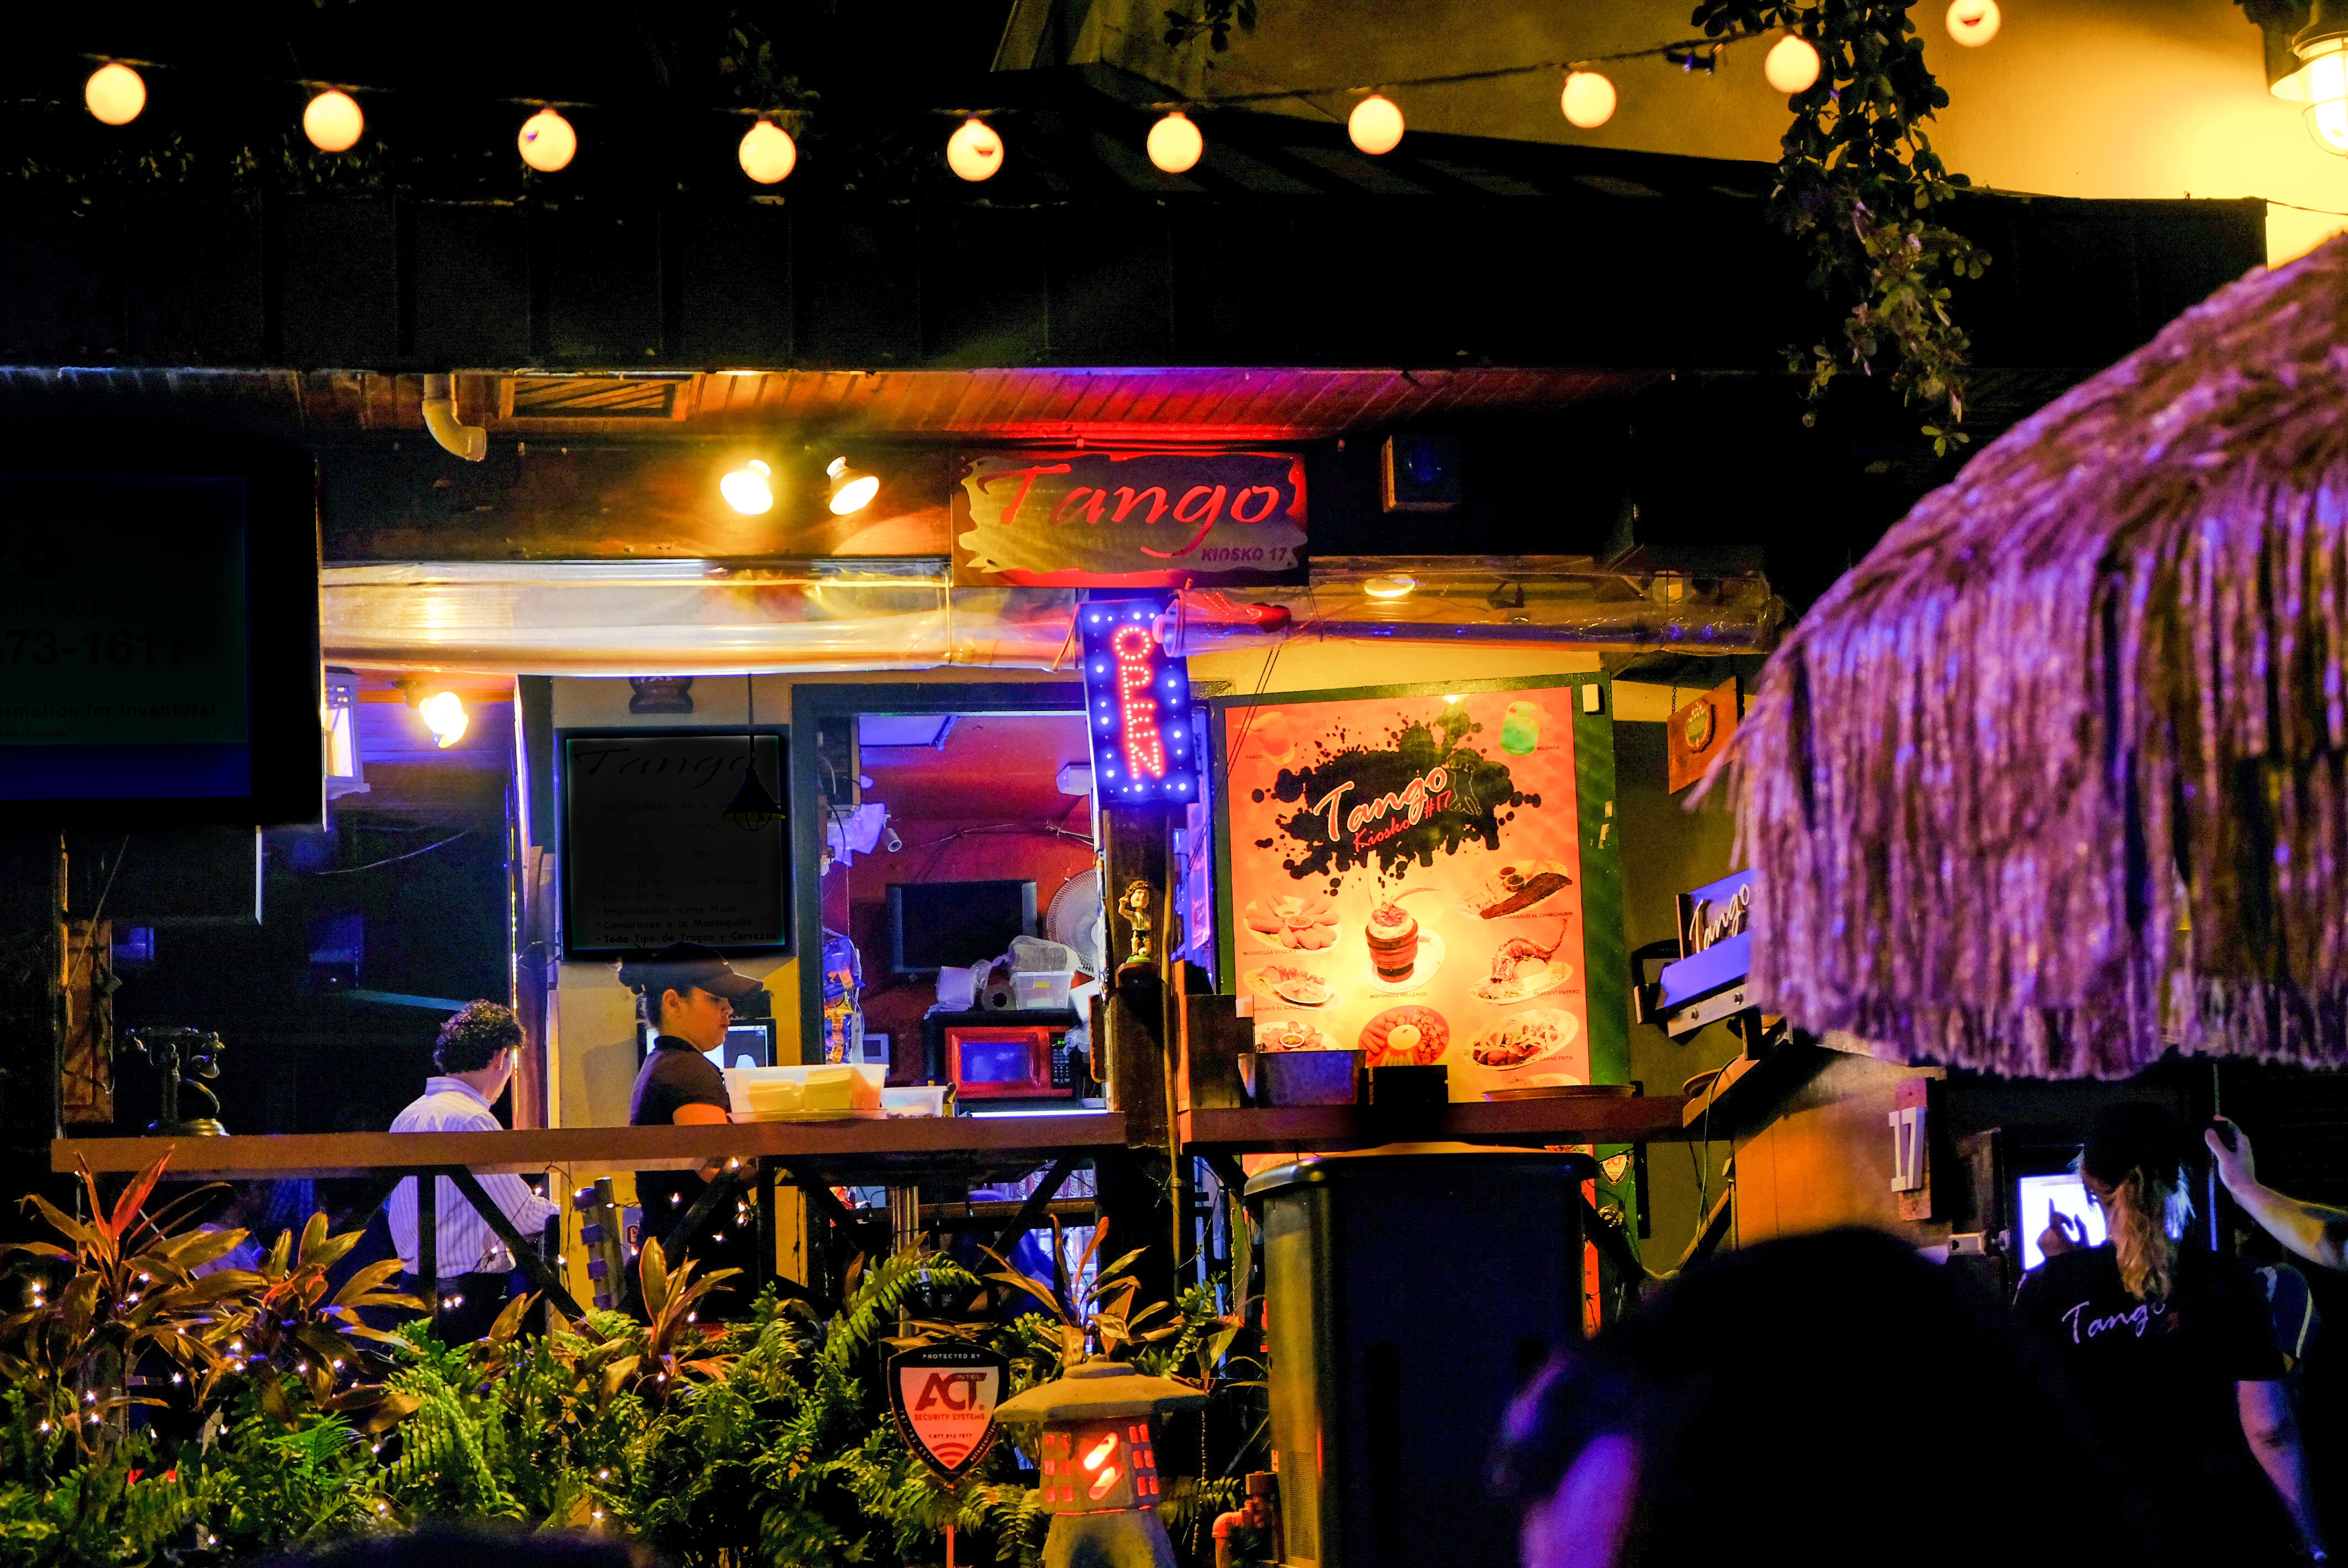 tango neon sign in ponce puerto rico at la guancha